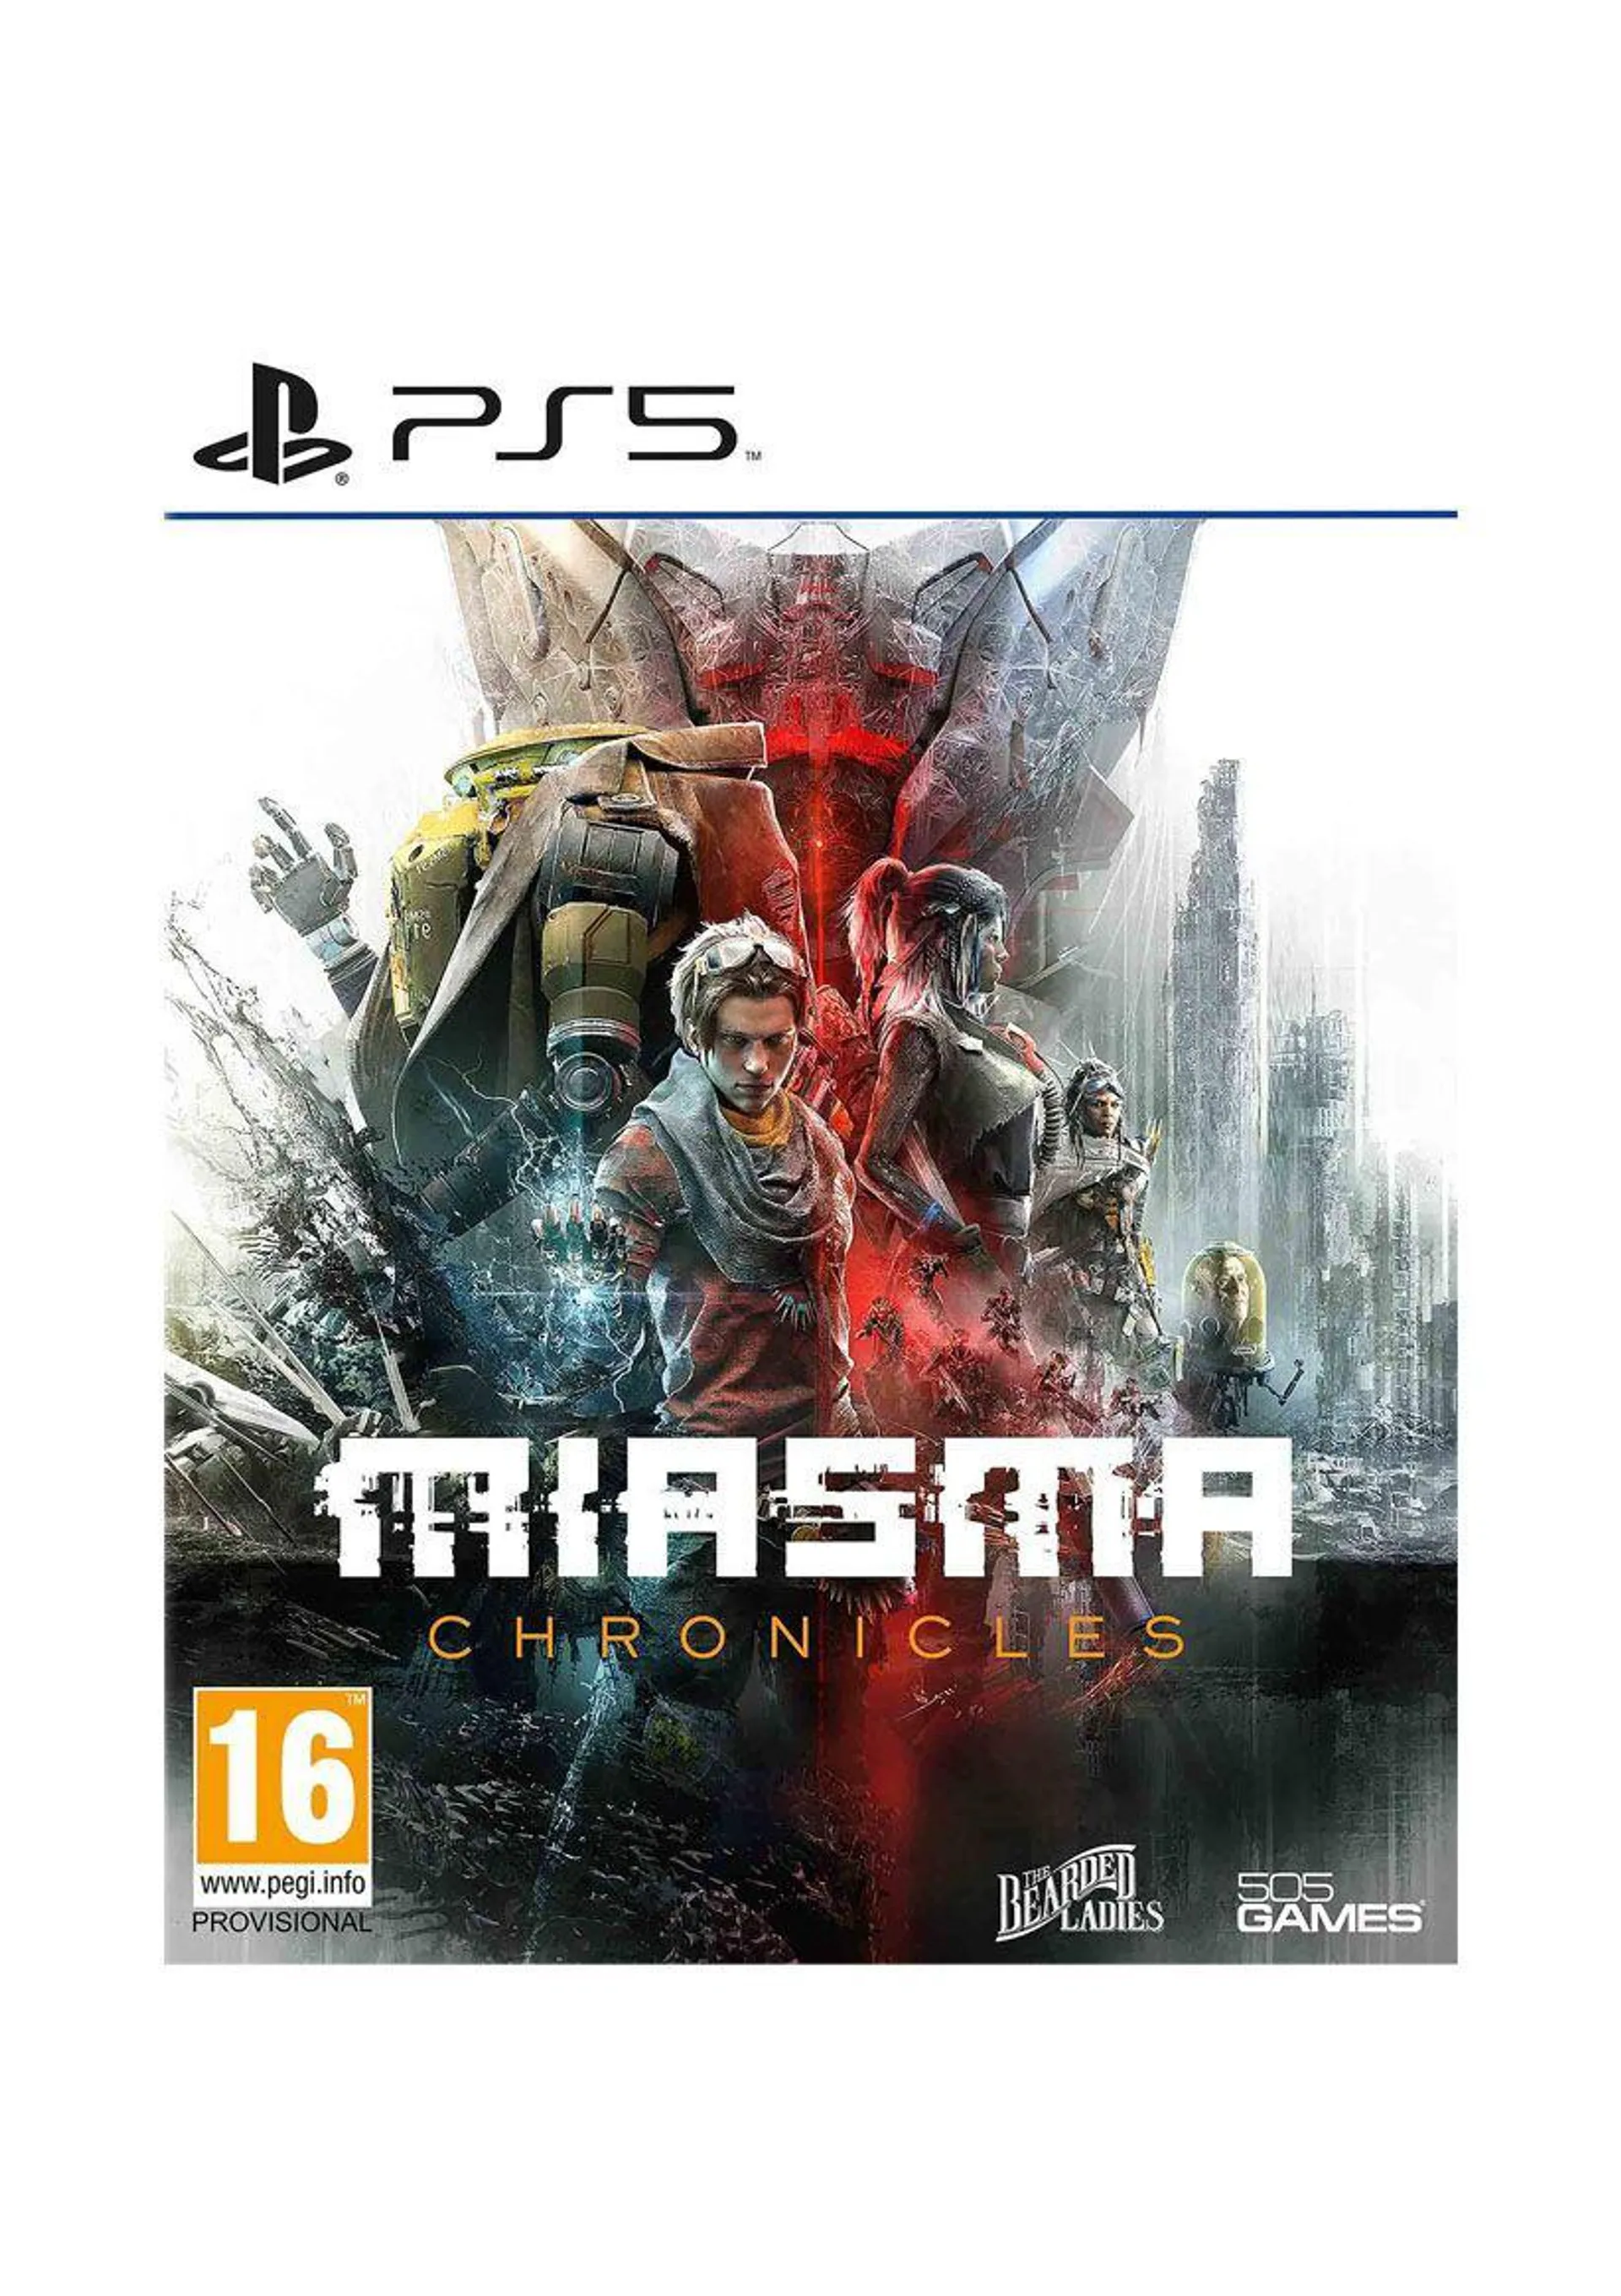 Miasma Chronicles on PlayStation 5